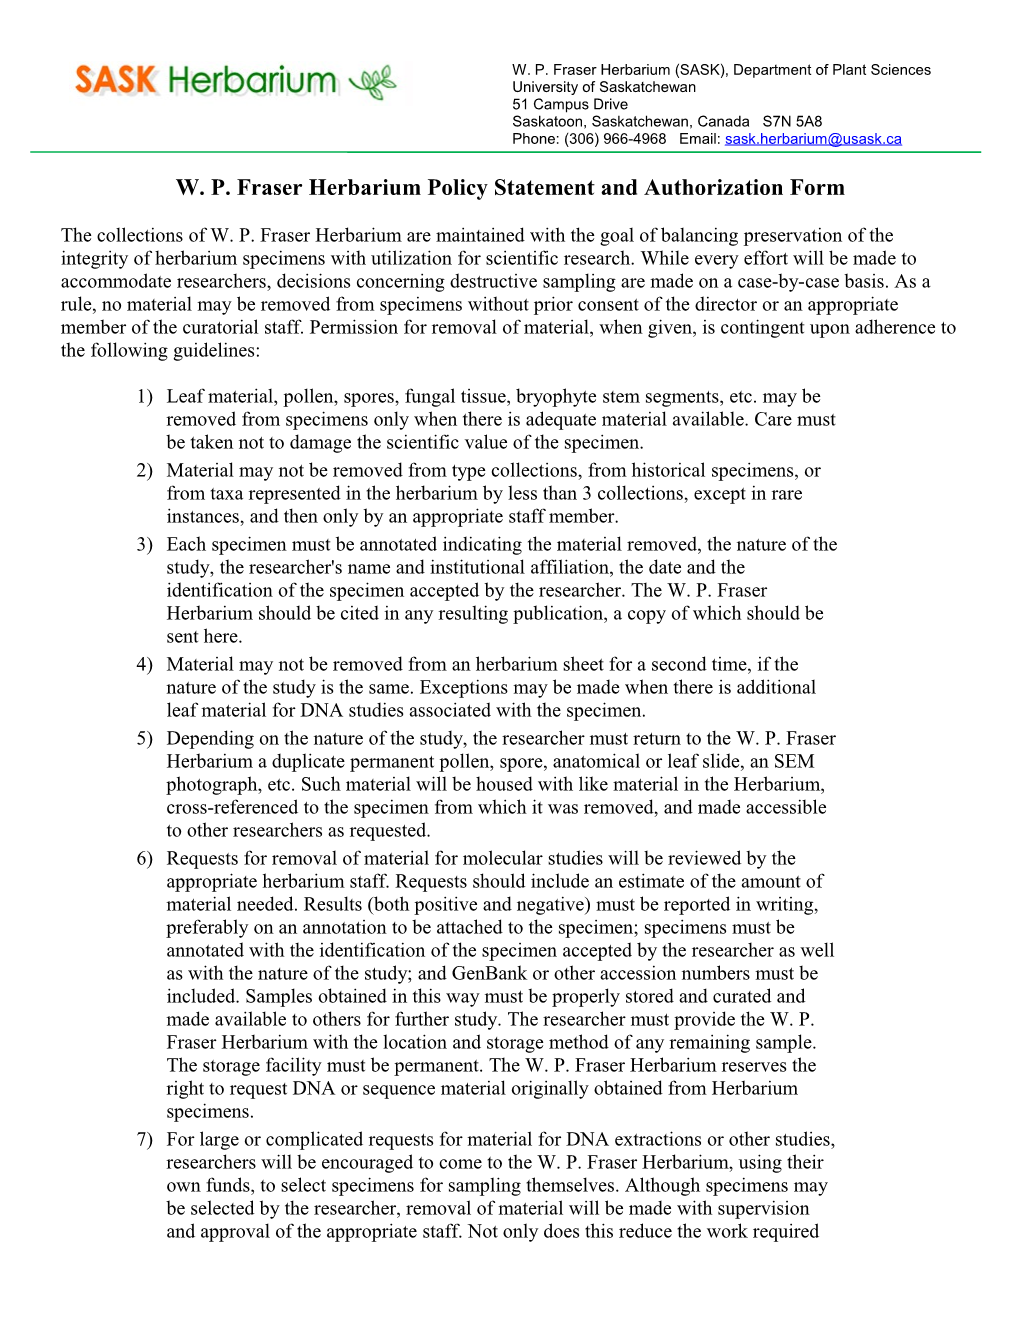 W. P. Fraser Herbarium Policy Statement and Authorization Form